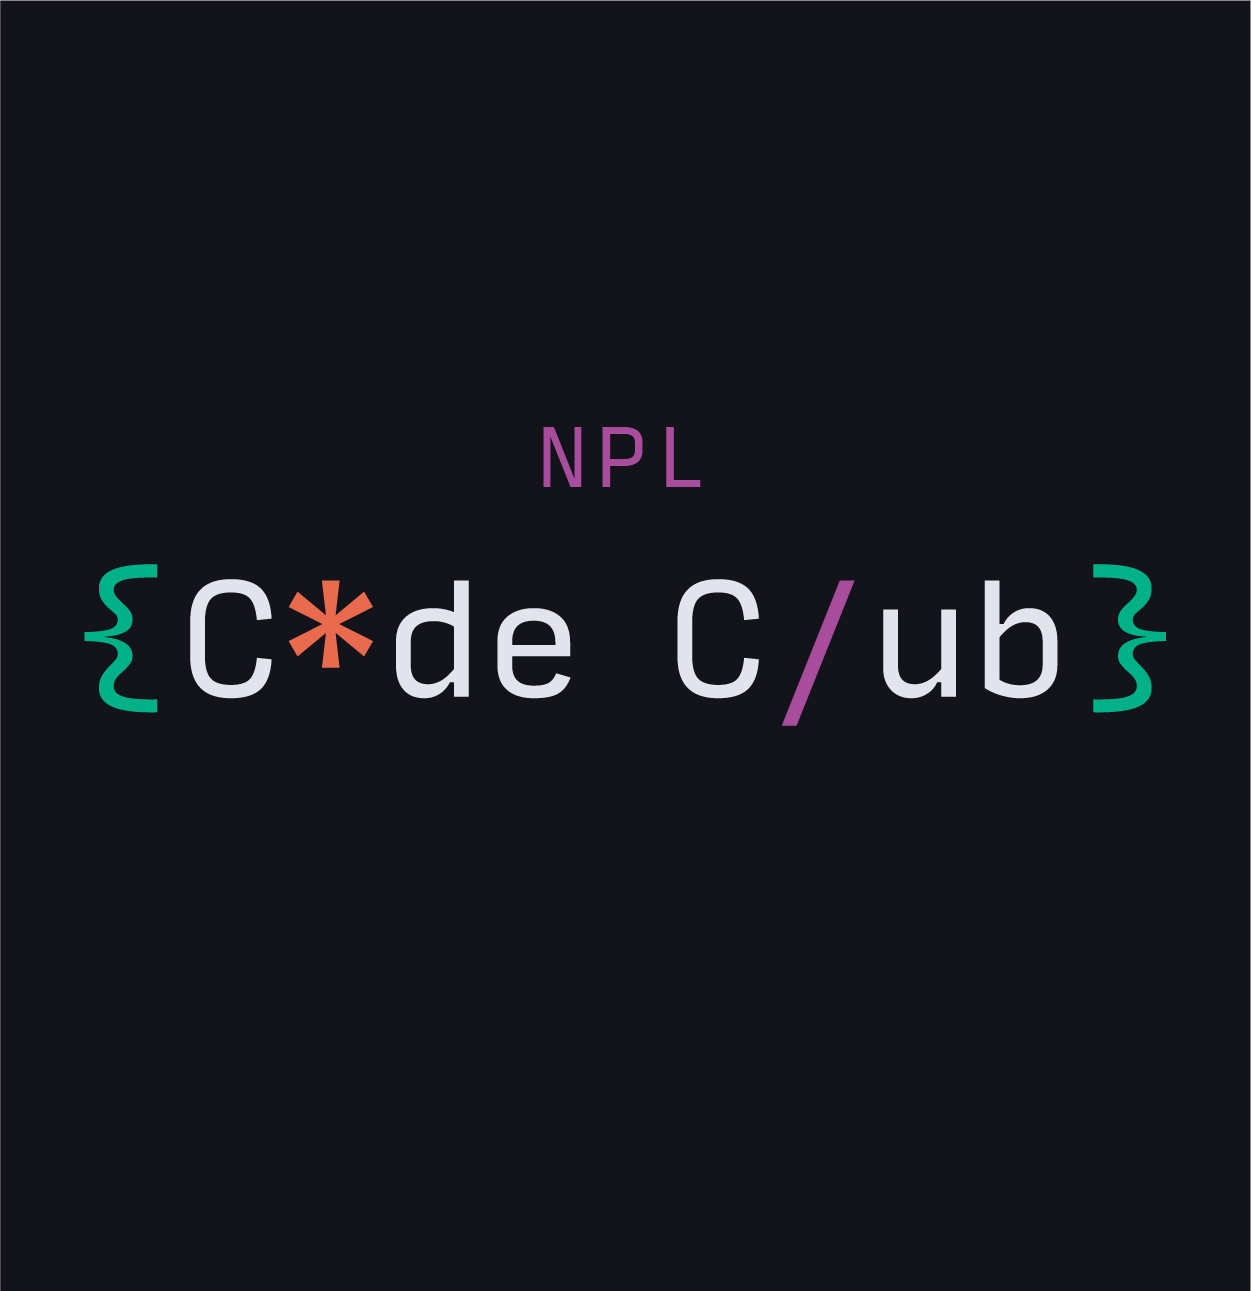 NPL Code Club